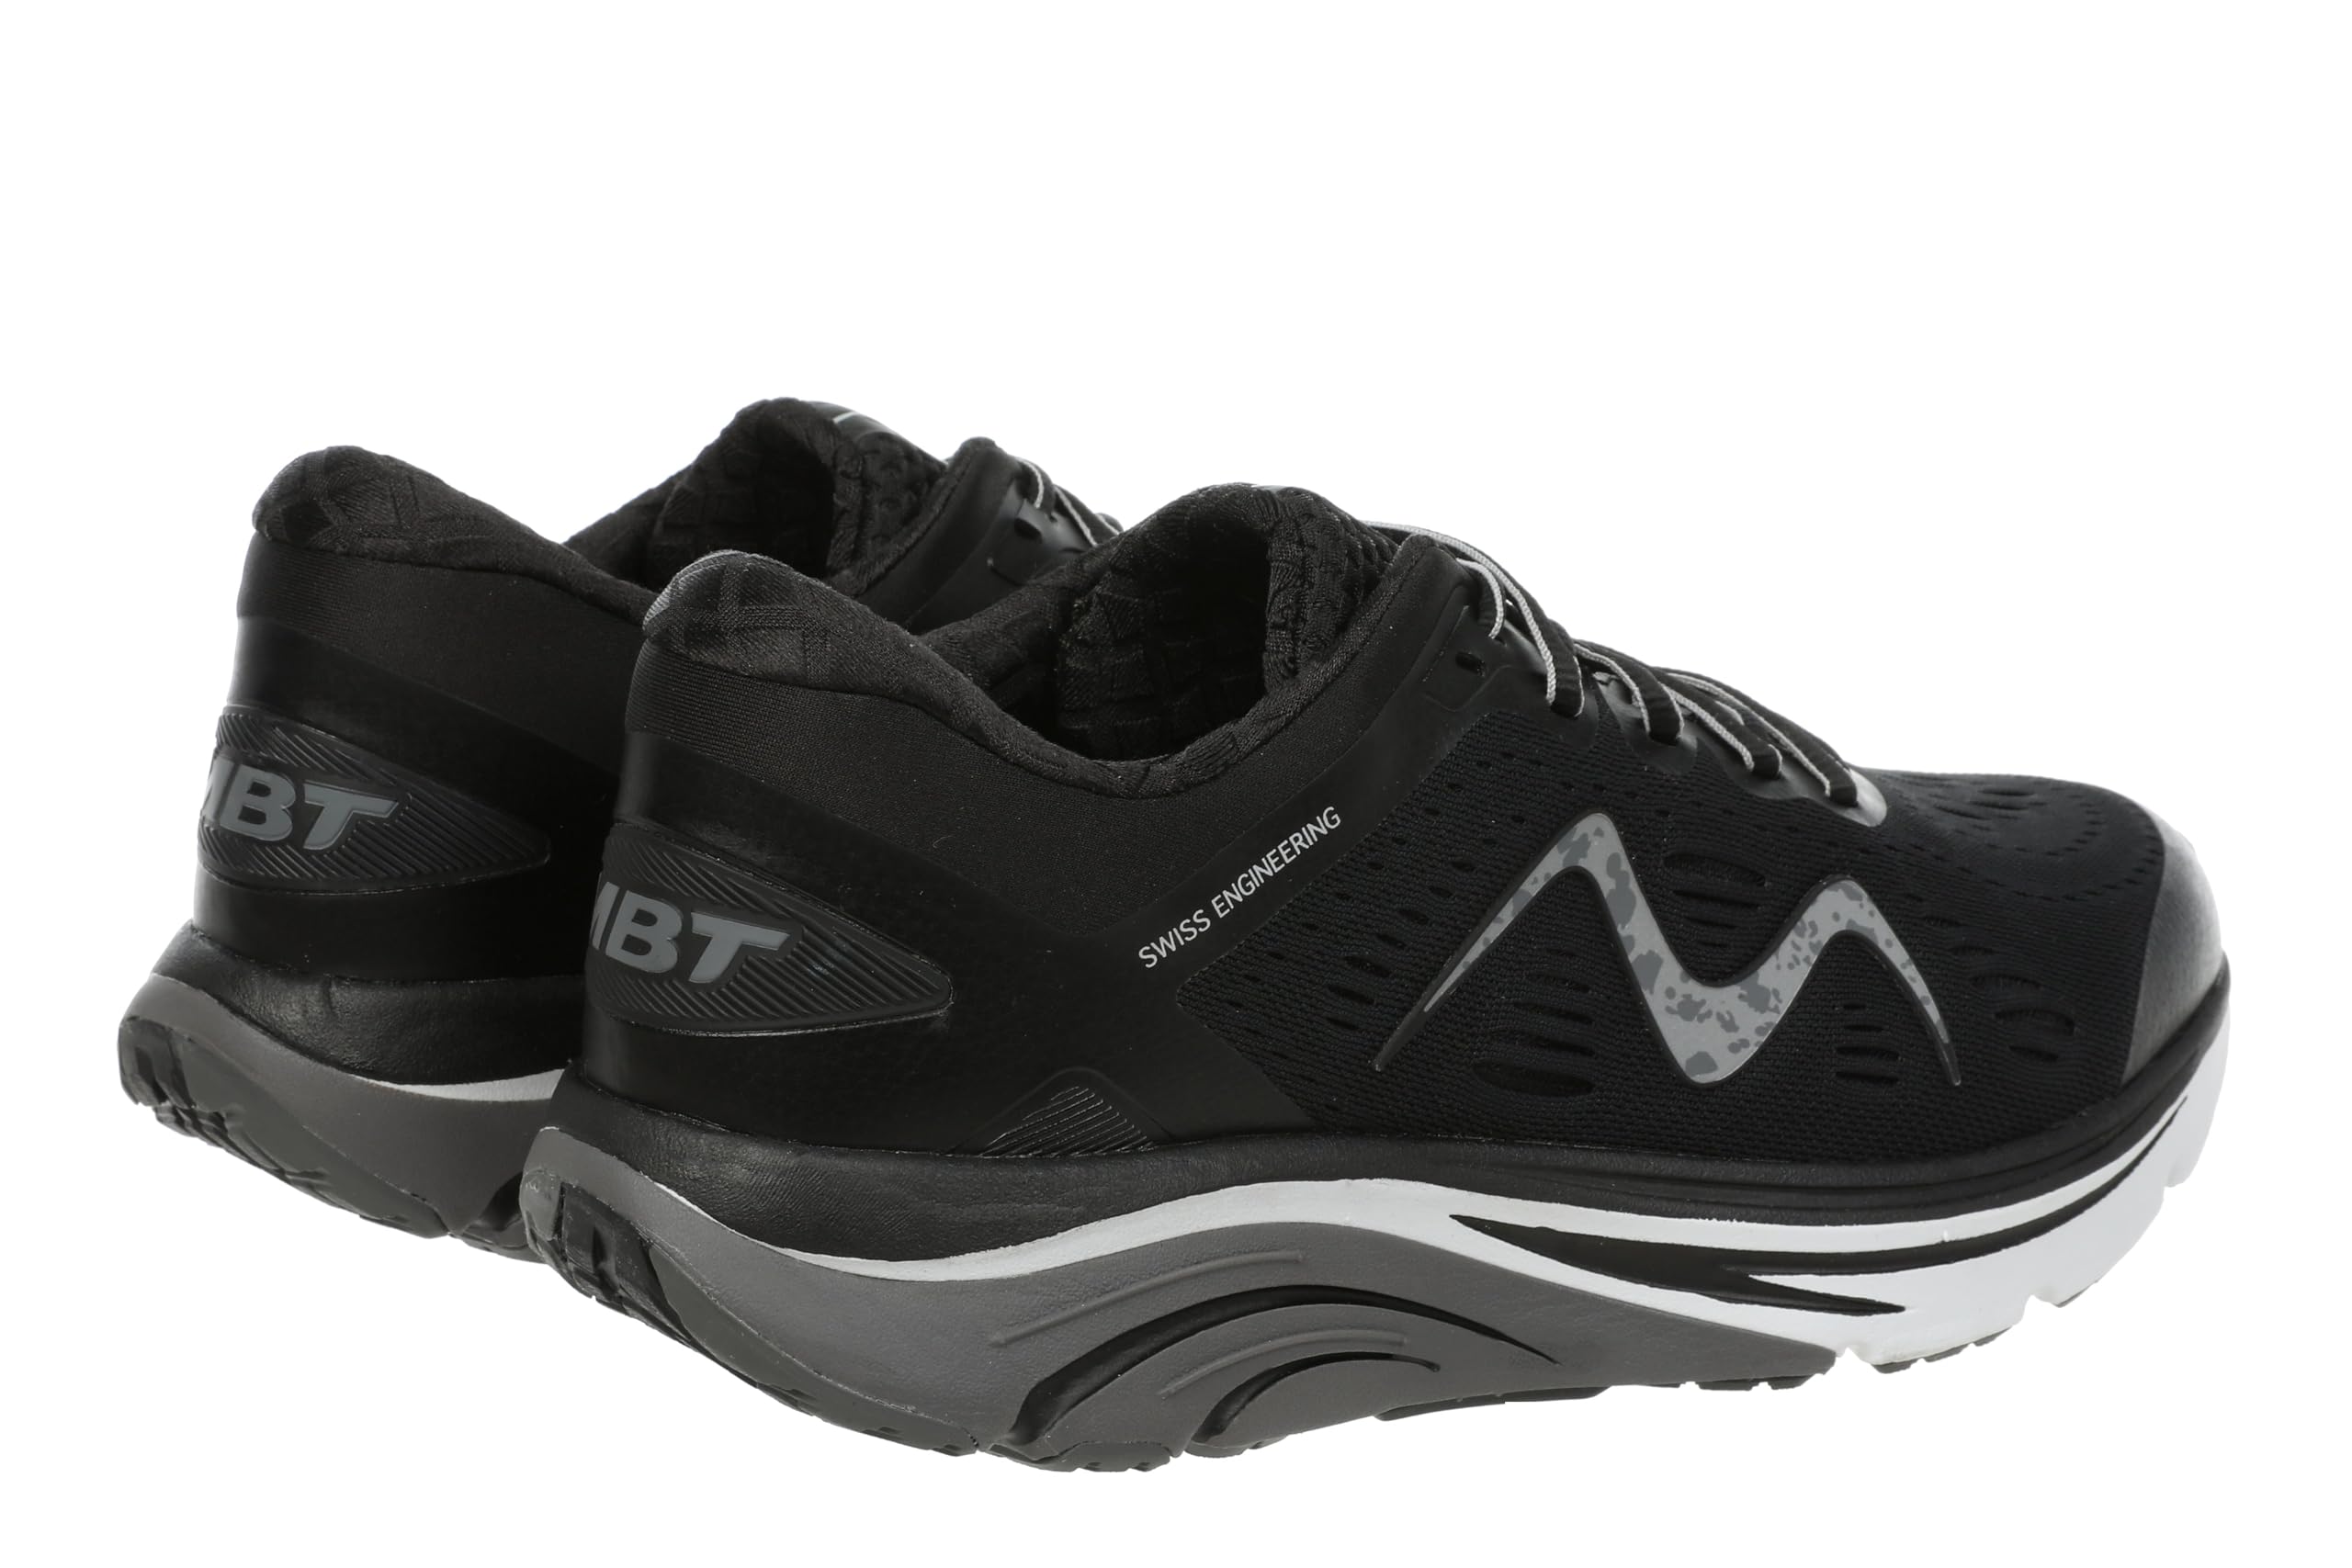 MBT Rocker Bottom Shoes Women’s – Athletic Running Walking Shoe MBT-2000, Black - 7 M US